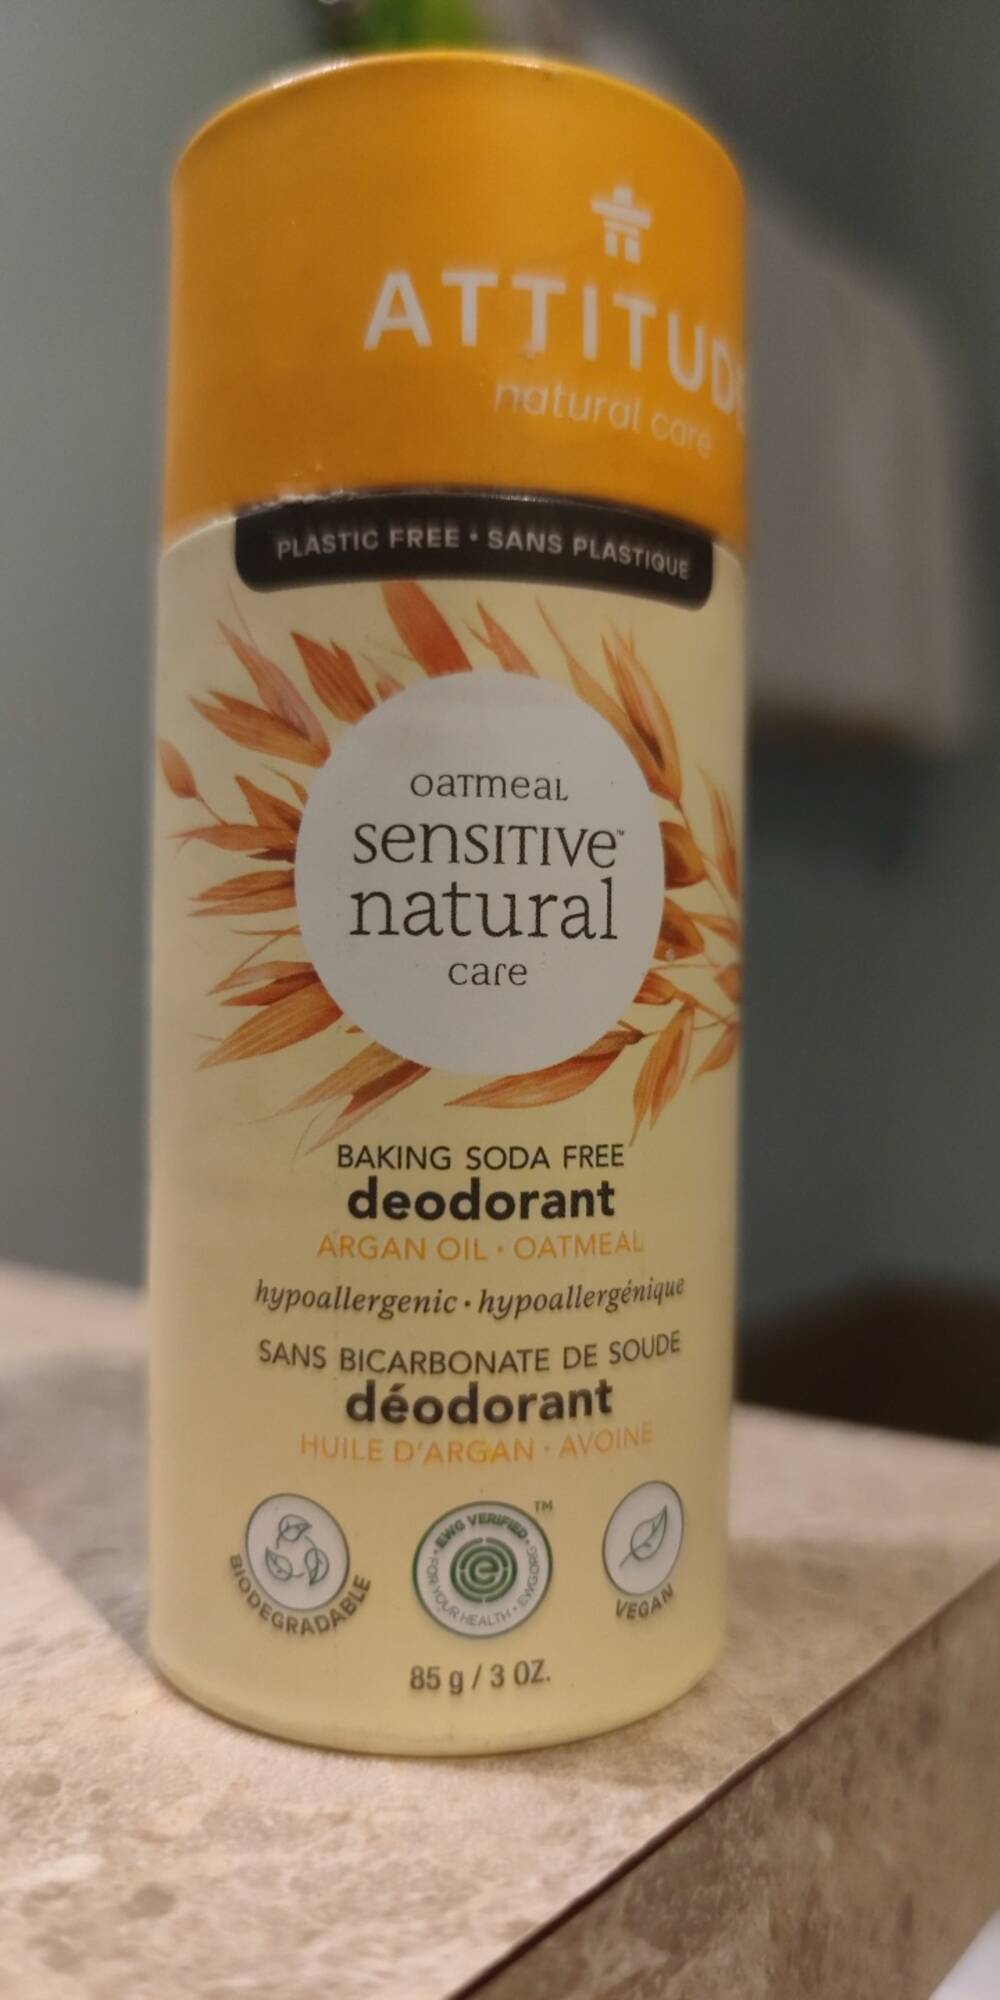 ATTITUDE - Sensitive natural - Deodorant